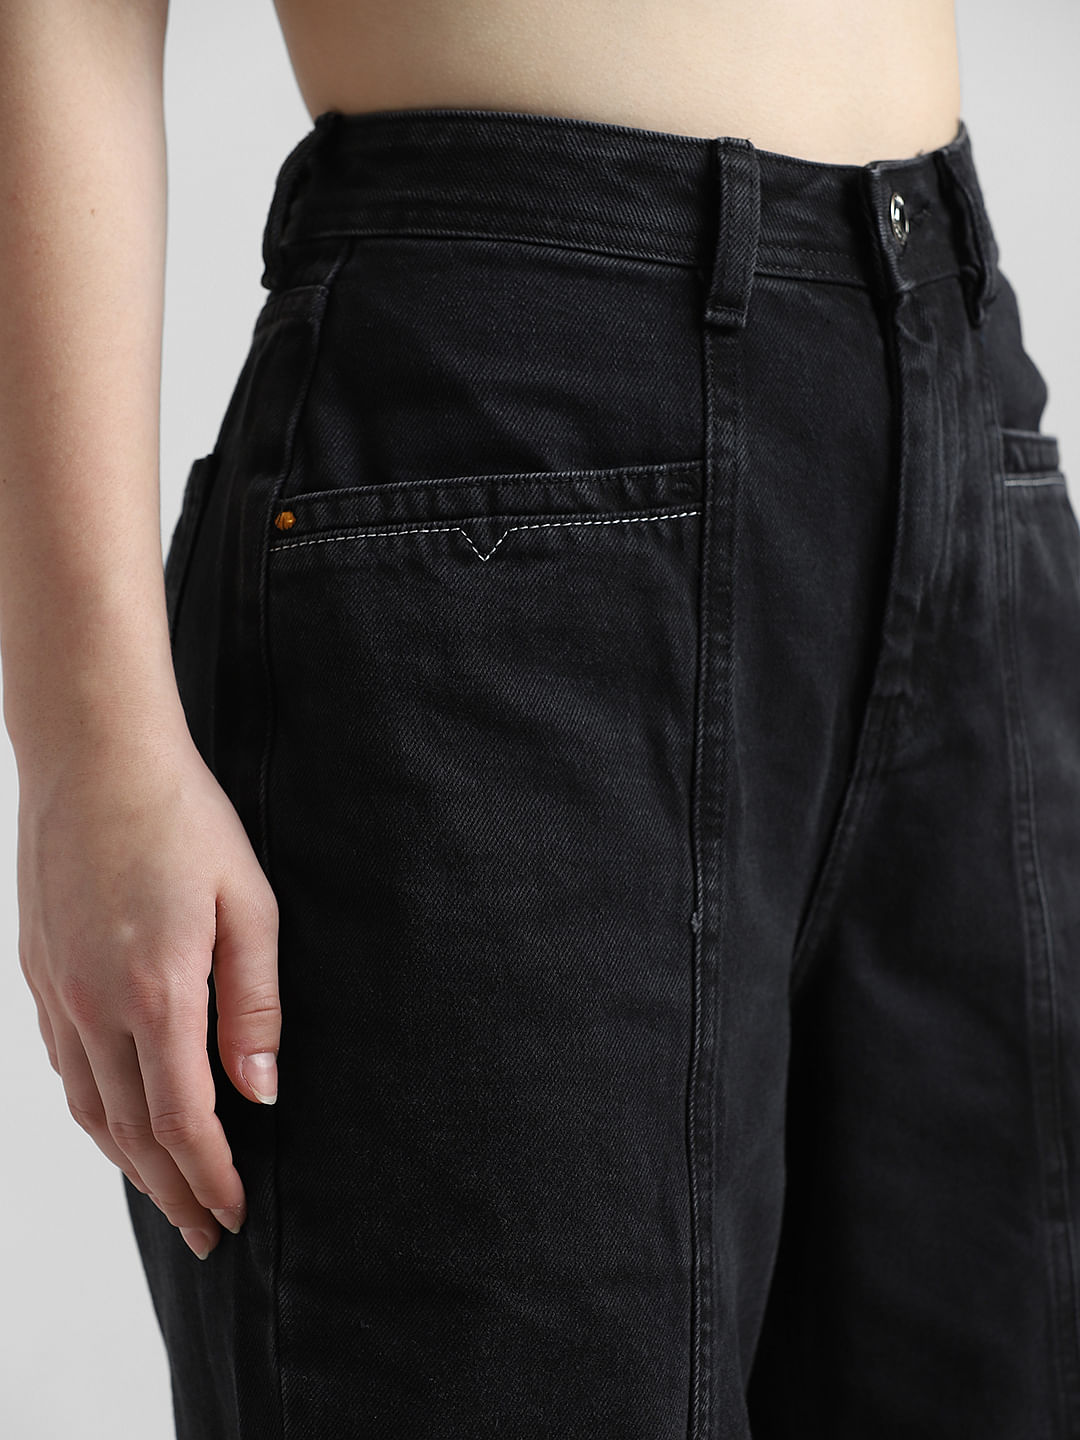 Nanaco Man Loose Baggy Jeans Hiphop Skateboard Embroidery Denim Slacks Pants  Men's Black Trousers Chinese Size 30-46